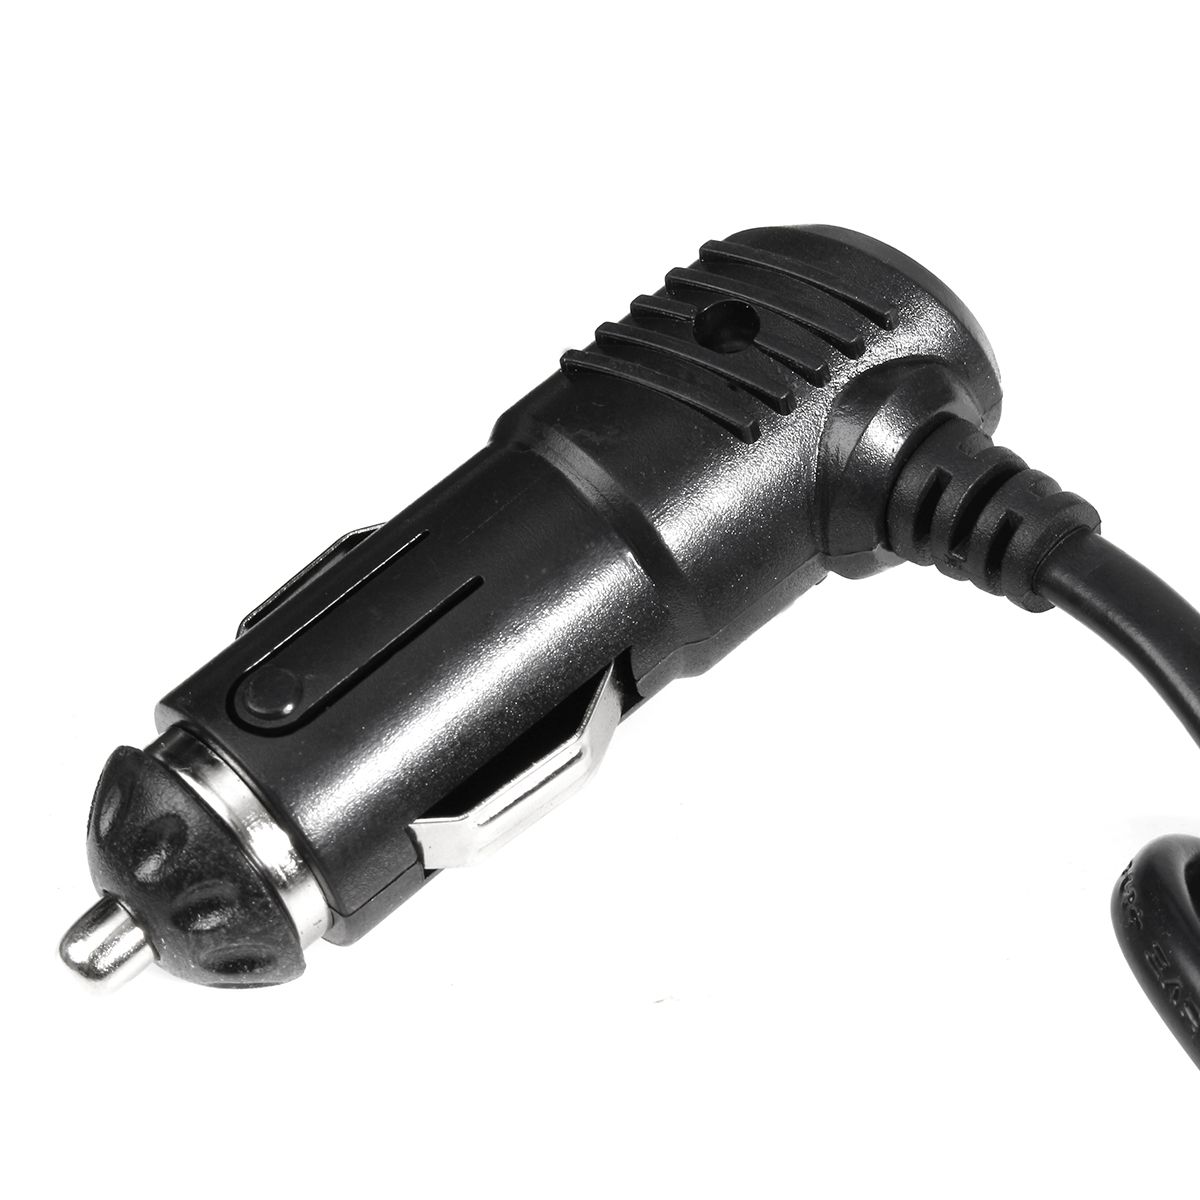 Dual-USB-4Way-Splitter-Car-Cigarette-Lighter-Socket-Power-Charger-Adapter-1224V-1136273